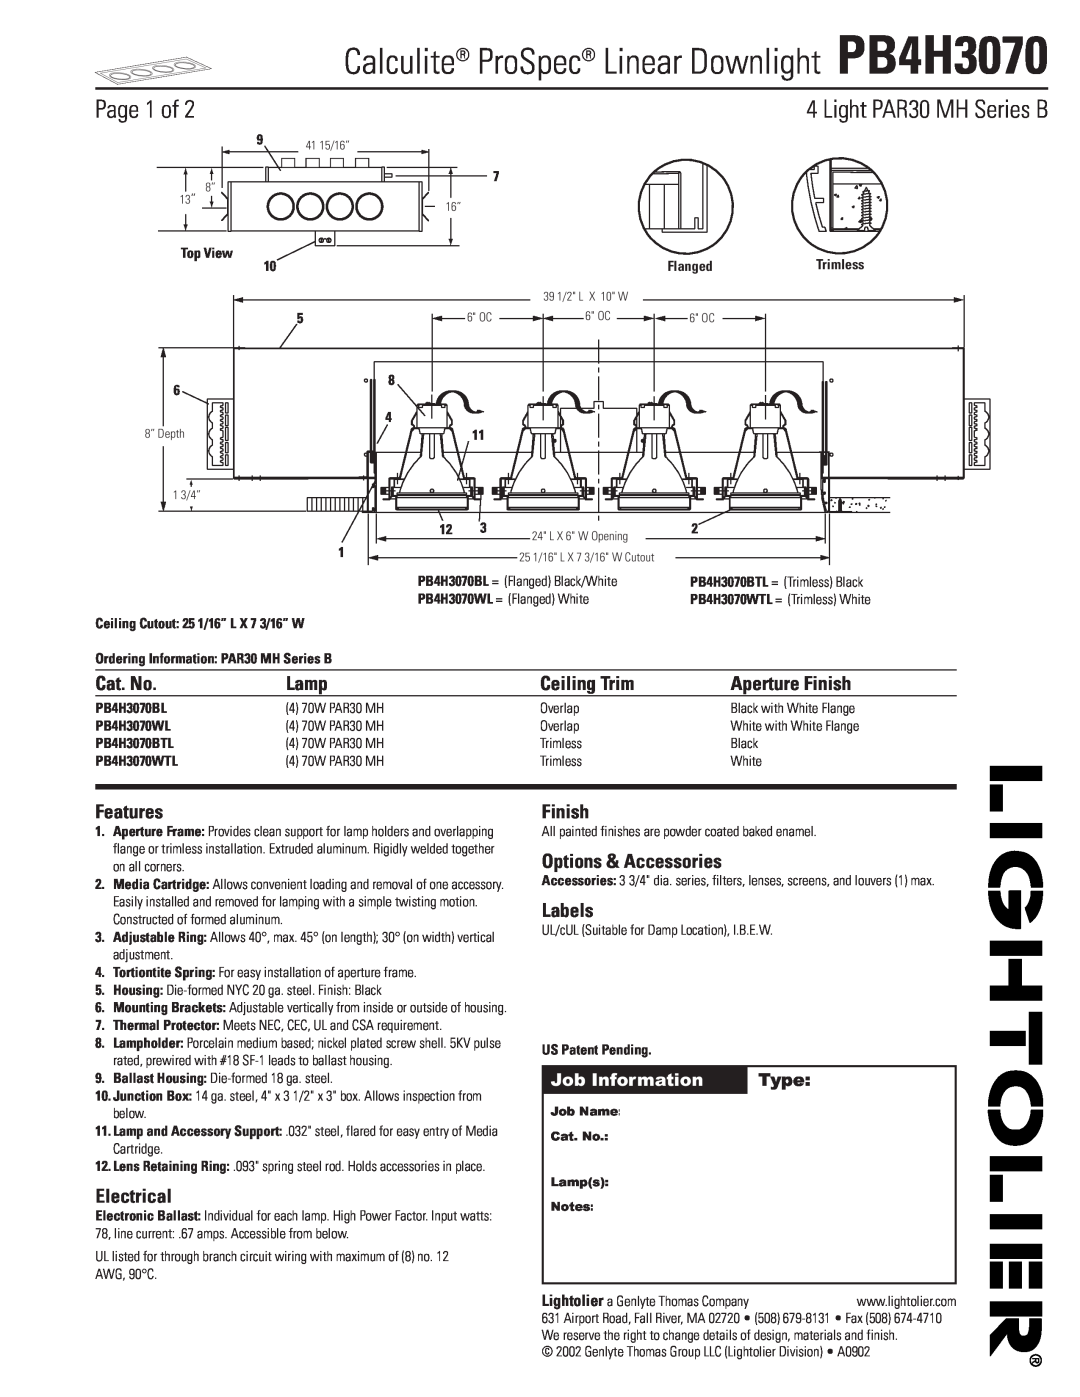 Lightolier manual Calculite ProSpec Linear Downlight PB4H3070, Page 1 of, Light PAR30 MH Series B, Cat. No, Lamp, Type 